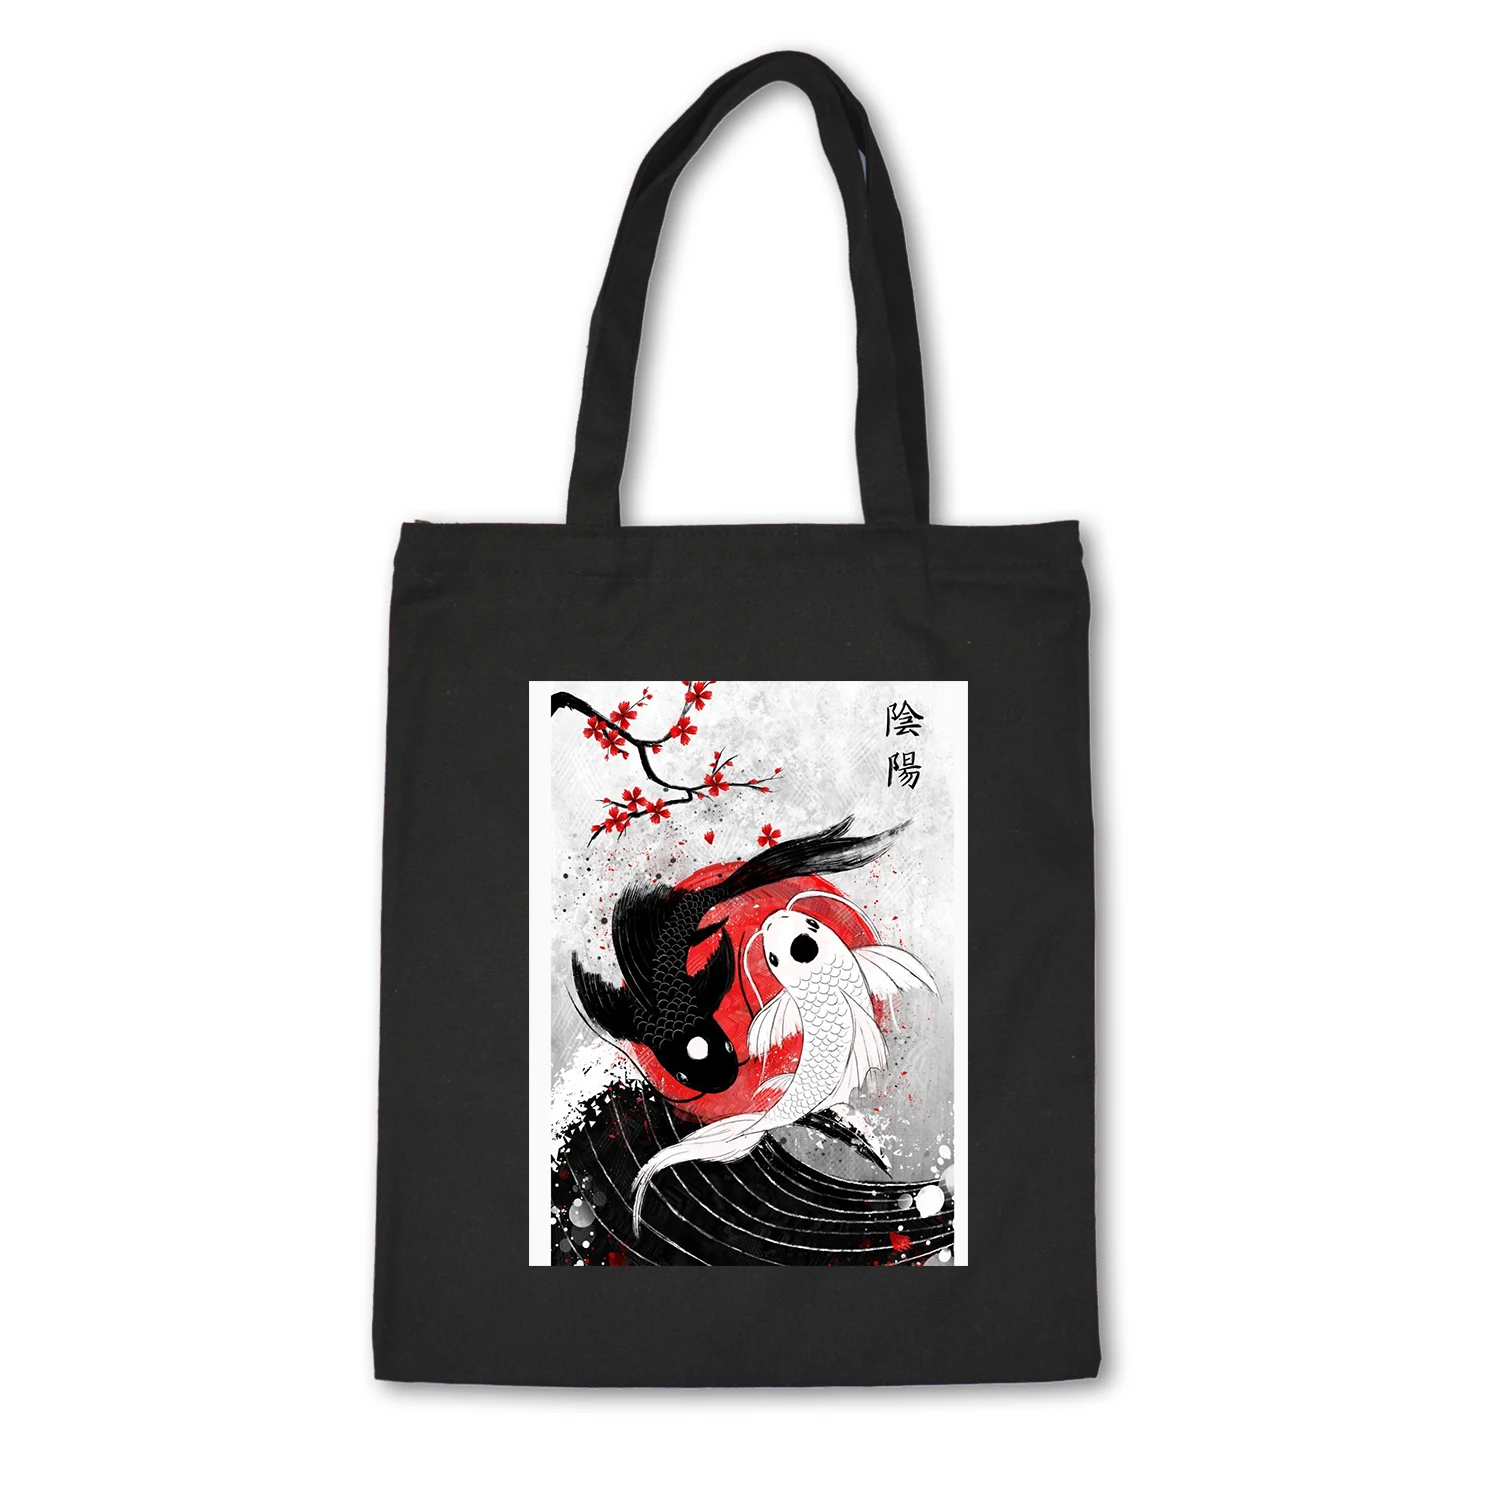 For Sale Handbag Cloth-Bag Japanese-Style Fish-Print Black Cotton Canvas with Bolsas-De-Mano Unisex rZKEeRXyR